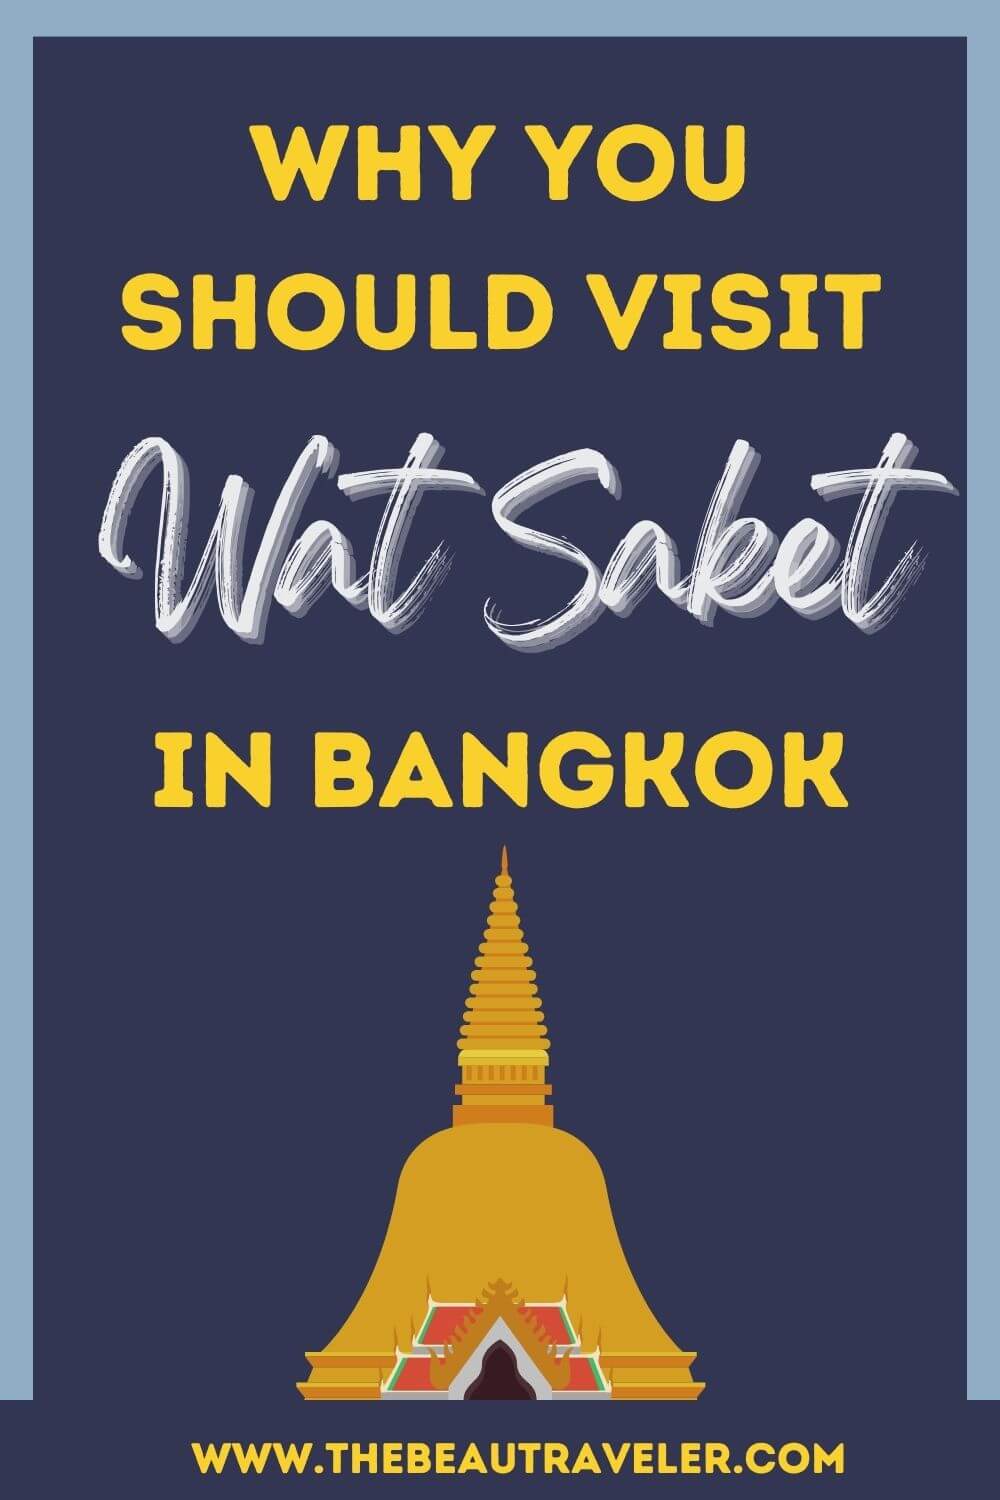 The Essential Guide to Visit Wat Saket in Bangkok, Thailand - The BeauTraveler